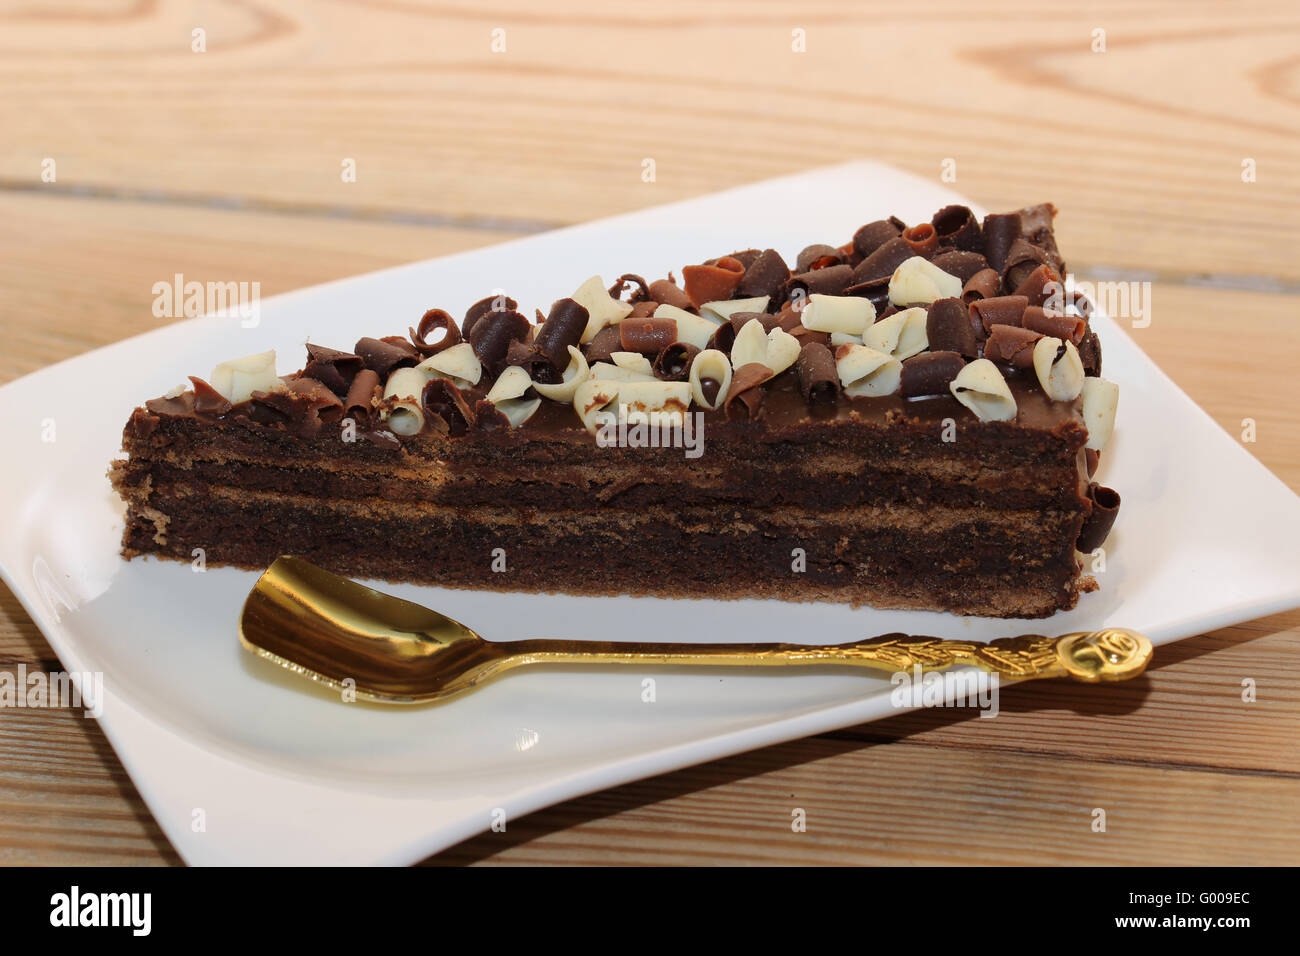 Chocolate cake with spoon Stock Photo